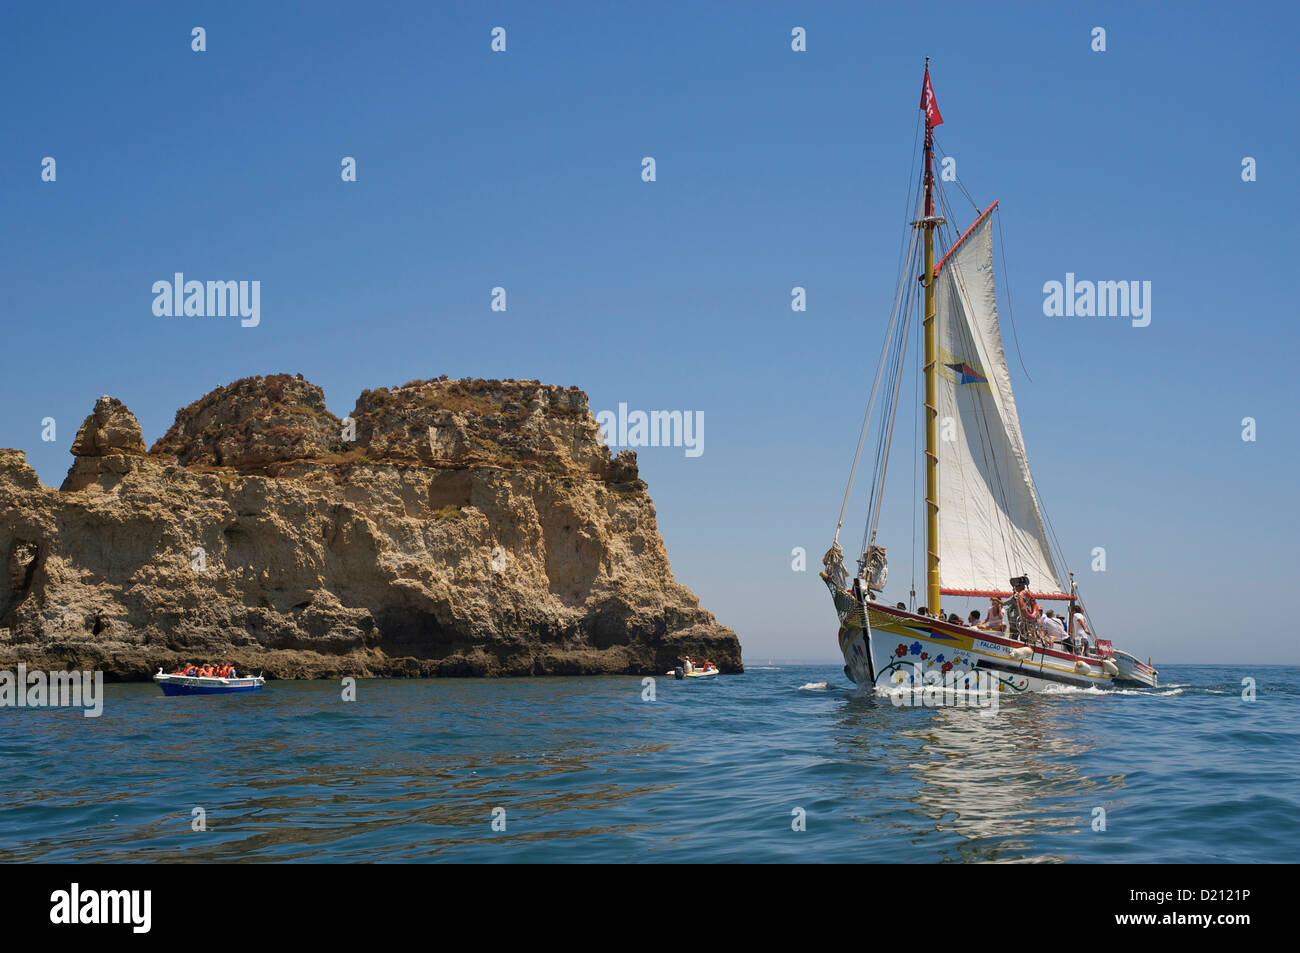 Sailing boat in front of bizar rock formations, Ponta da Piedade, near Lagos, Western Algarve, Portugal, Europe Stock Photo